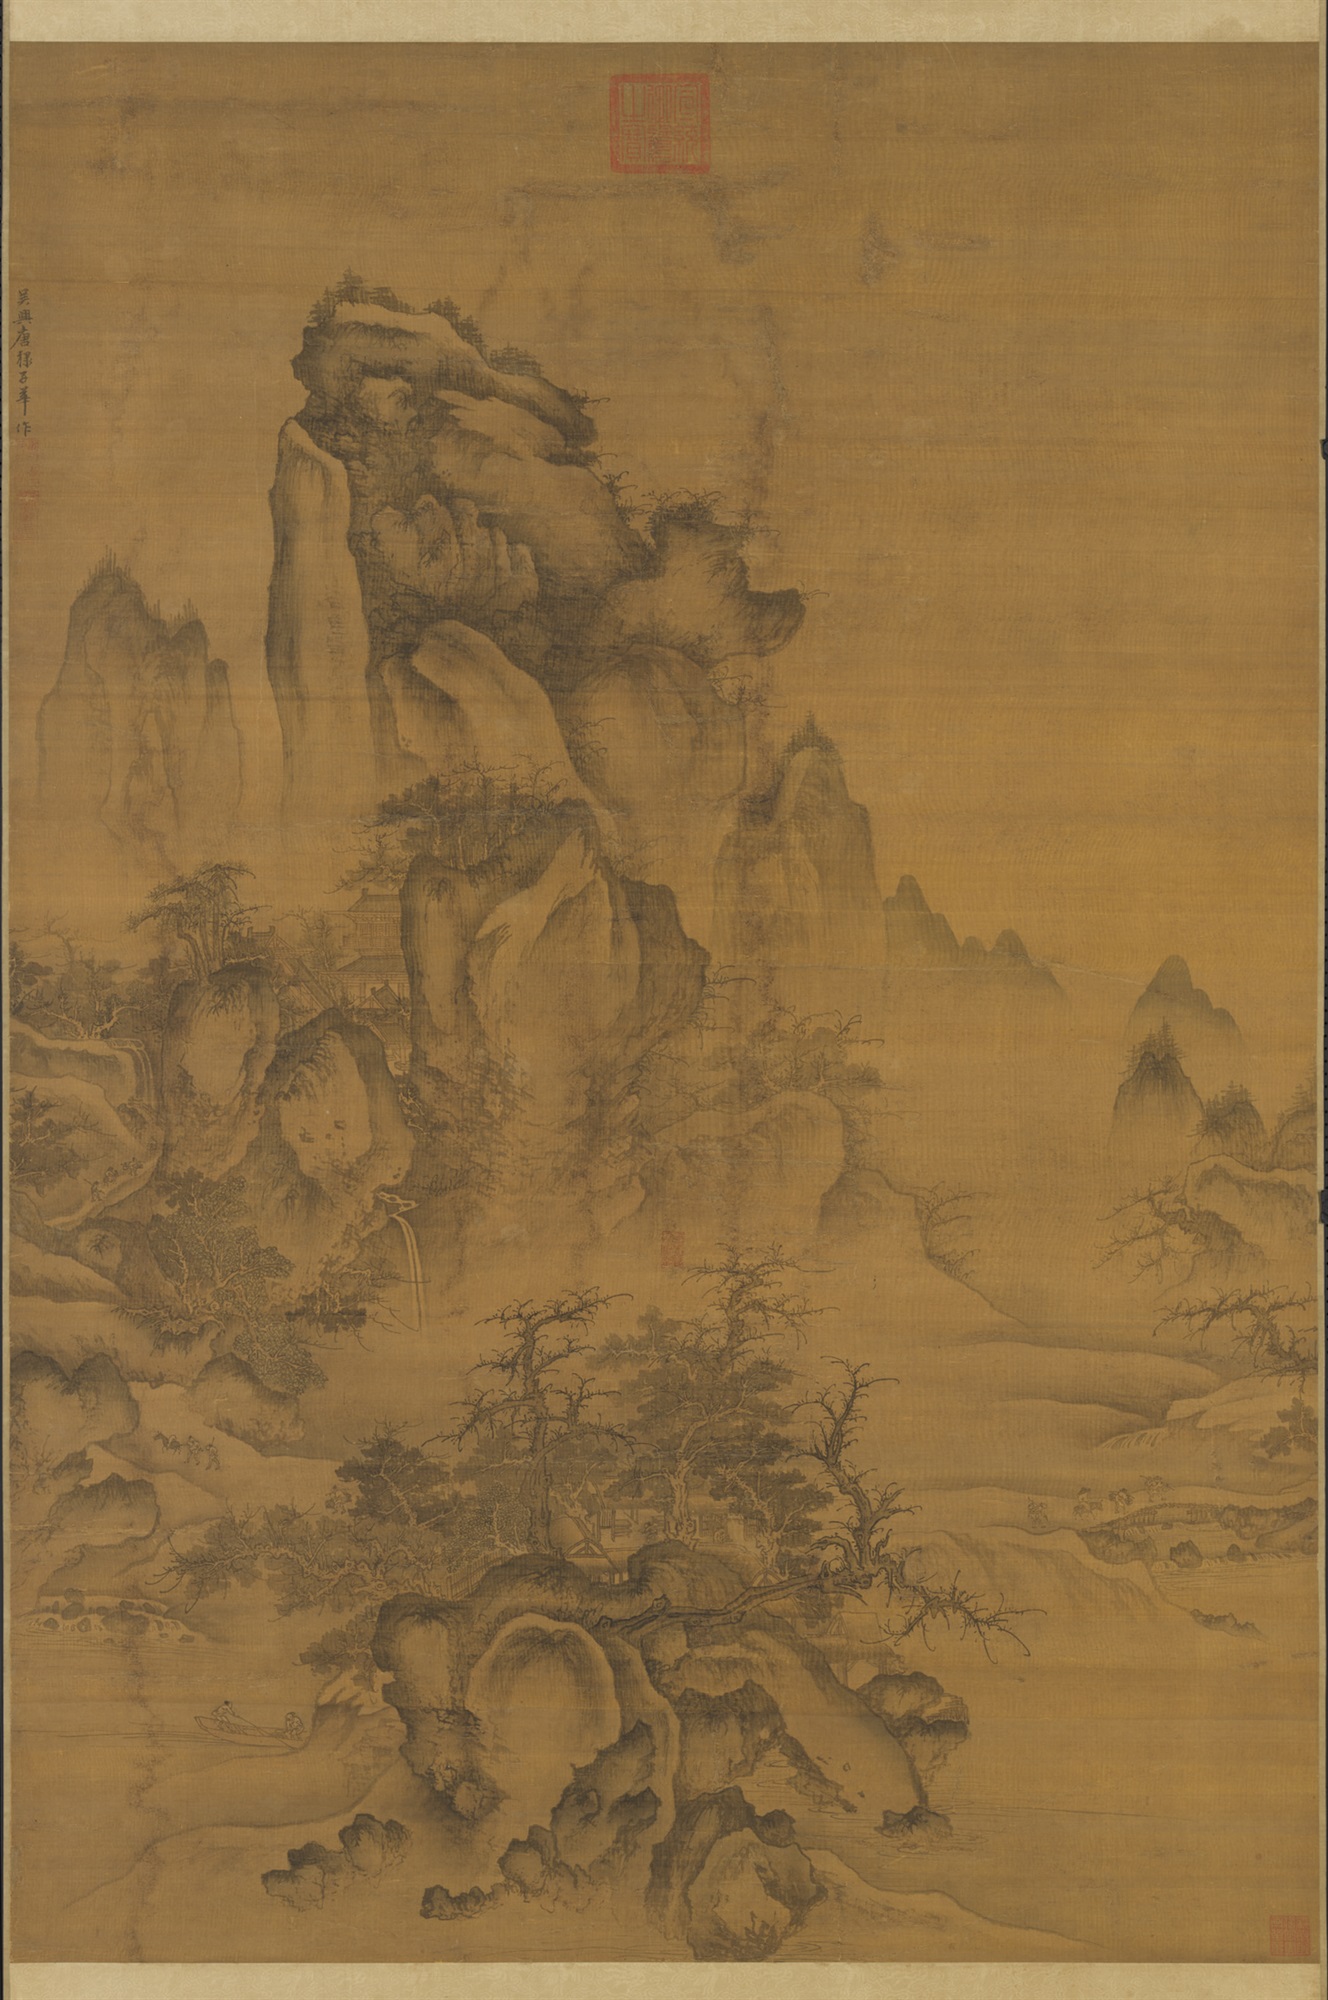 After Guo Xi’s “Travelers in Autumn Mountains” Tang Di (1296-1364), Yuan dynasty